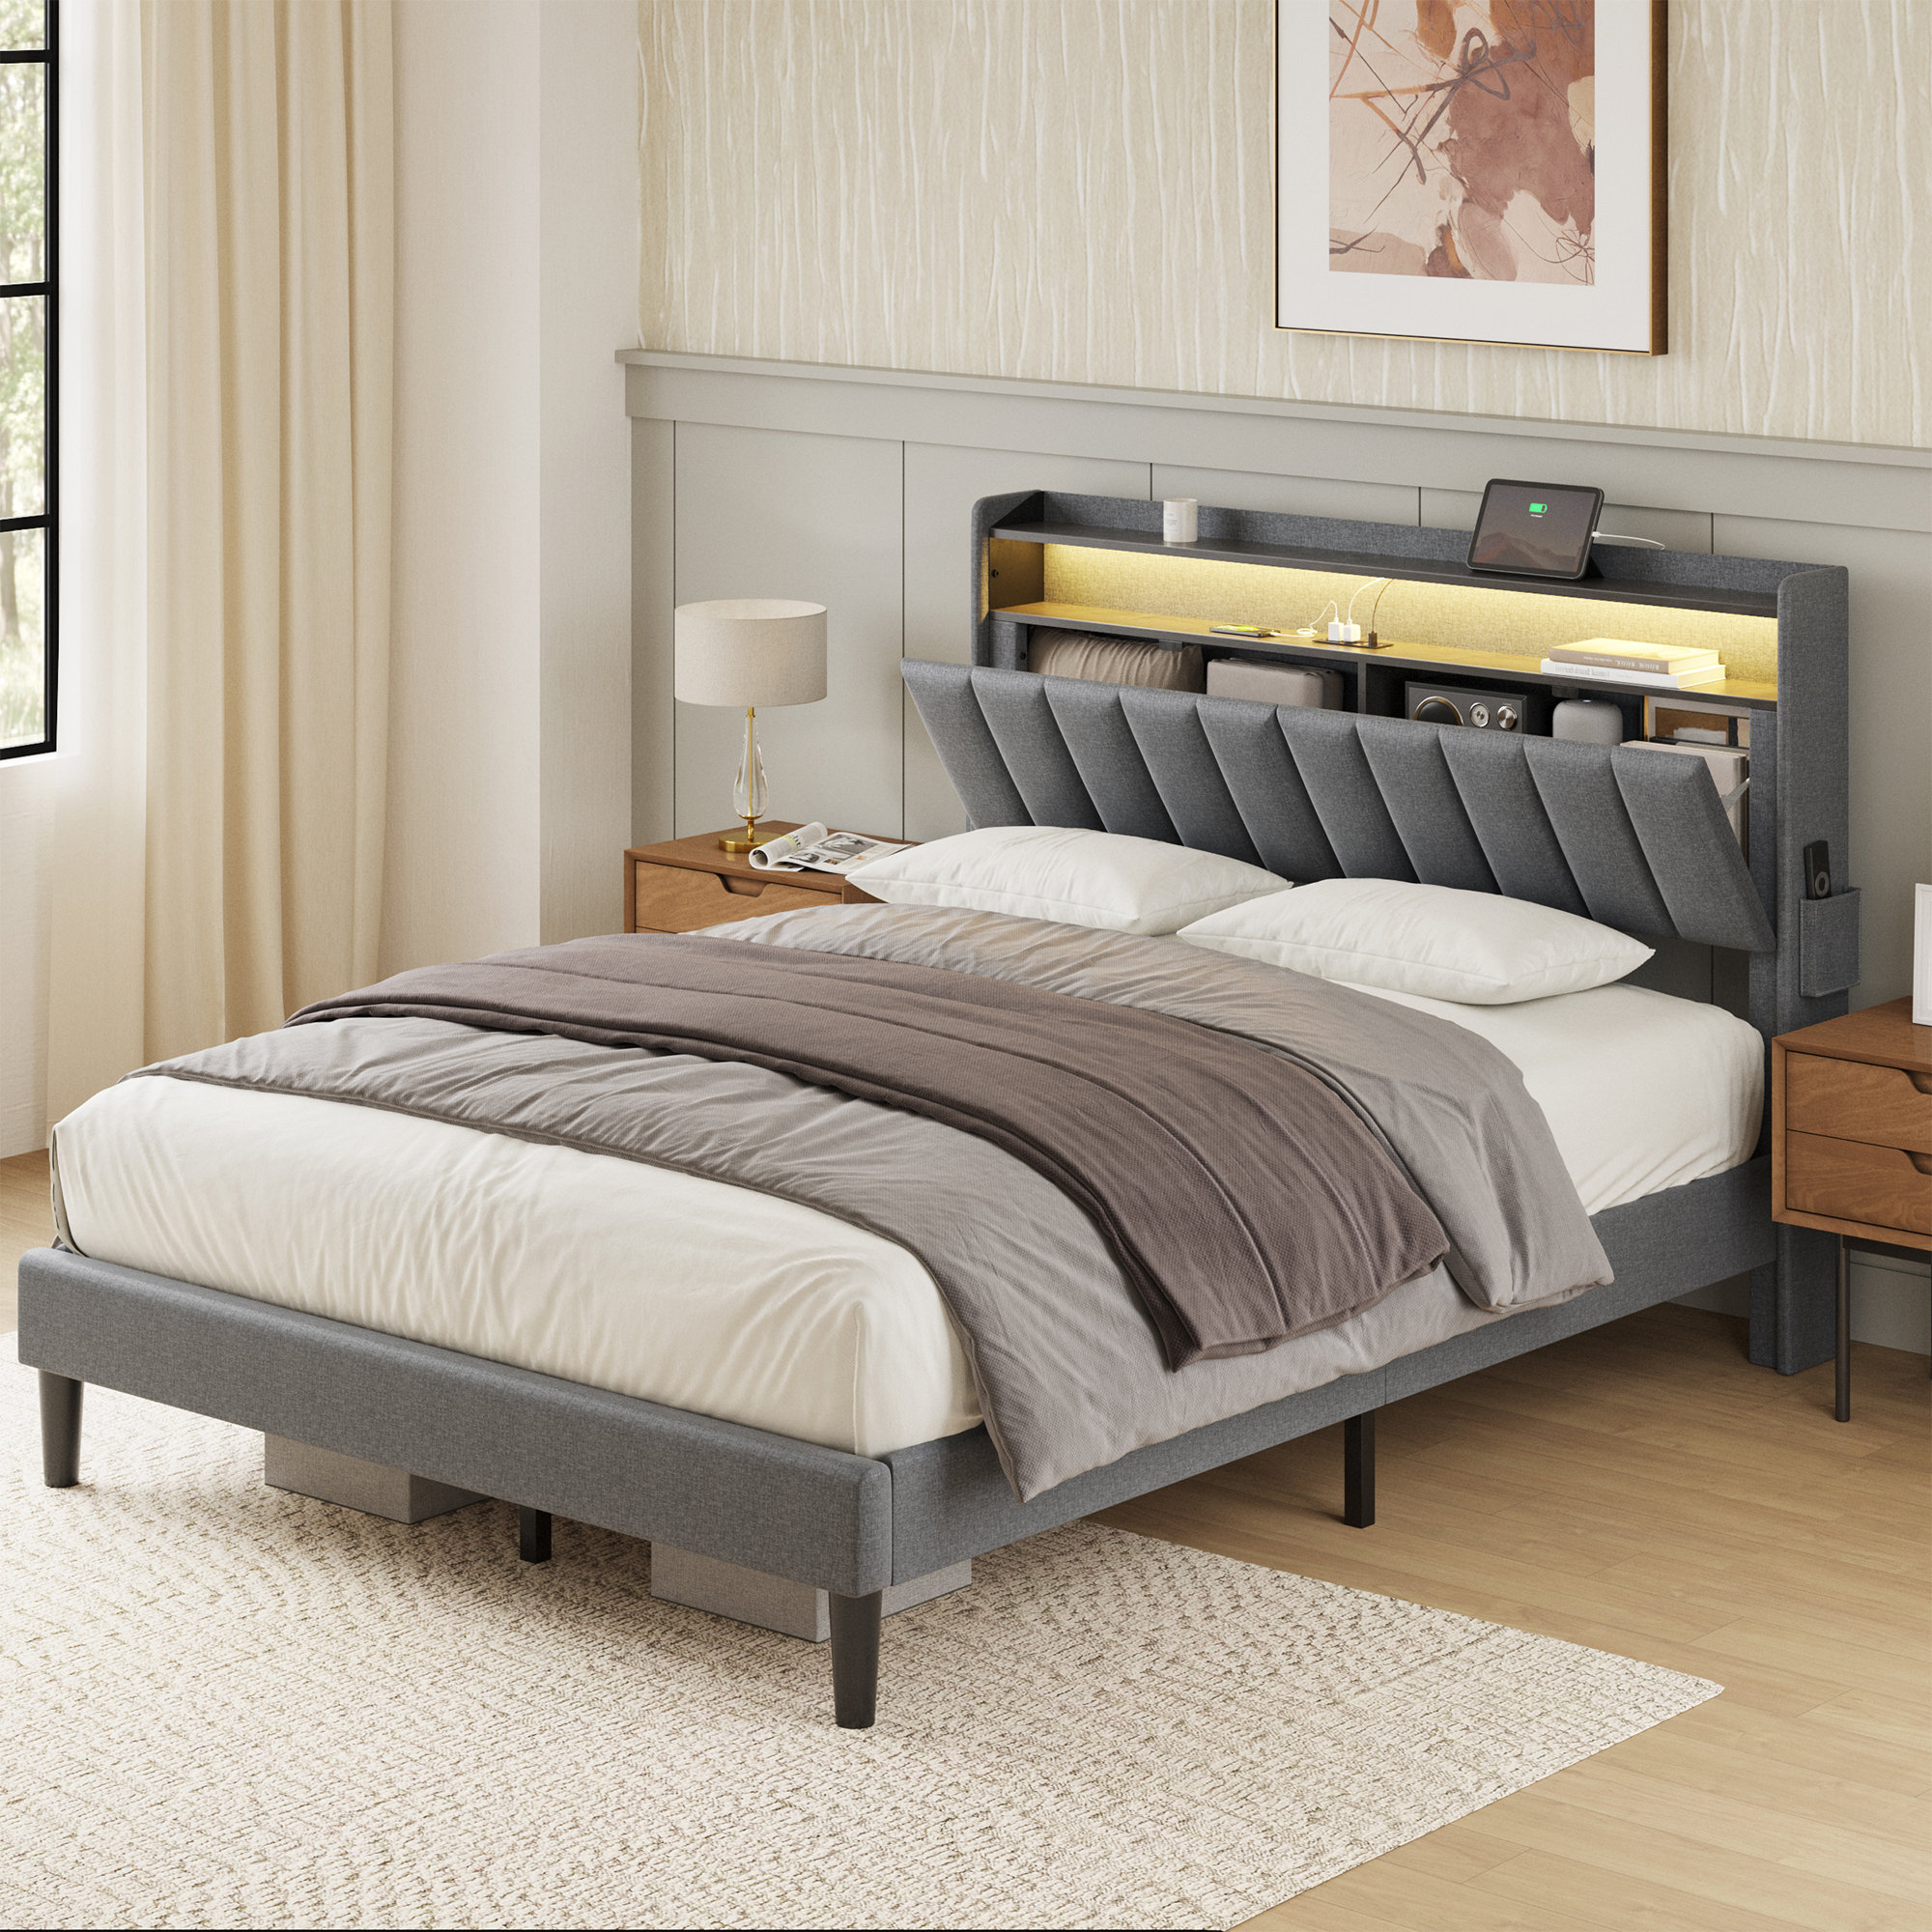 Neavins Bed Frame with Storage Headboard & LED Light, Upholstered Bed Frame with Outlet & USB Ports Ebern Designs Size: Full